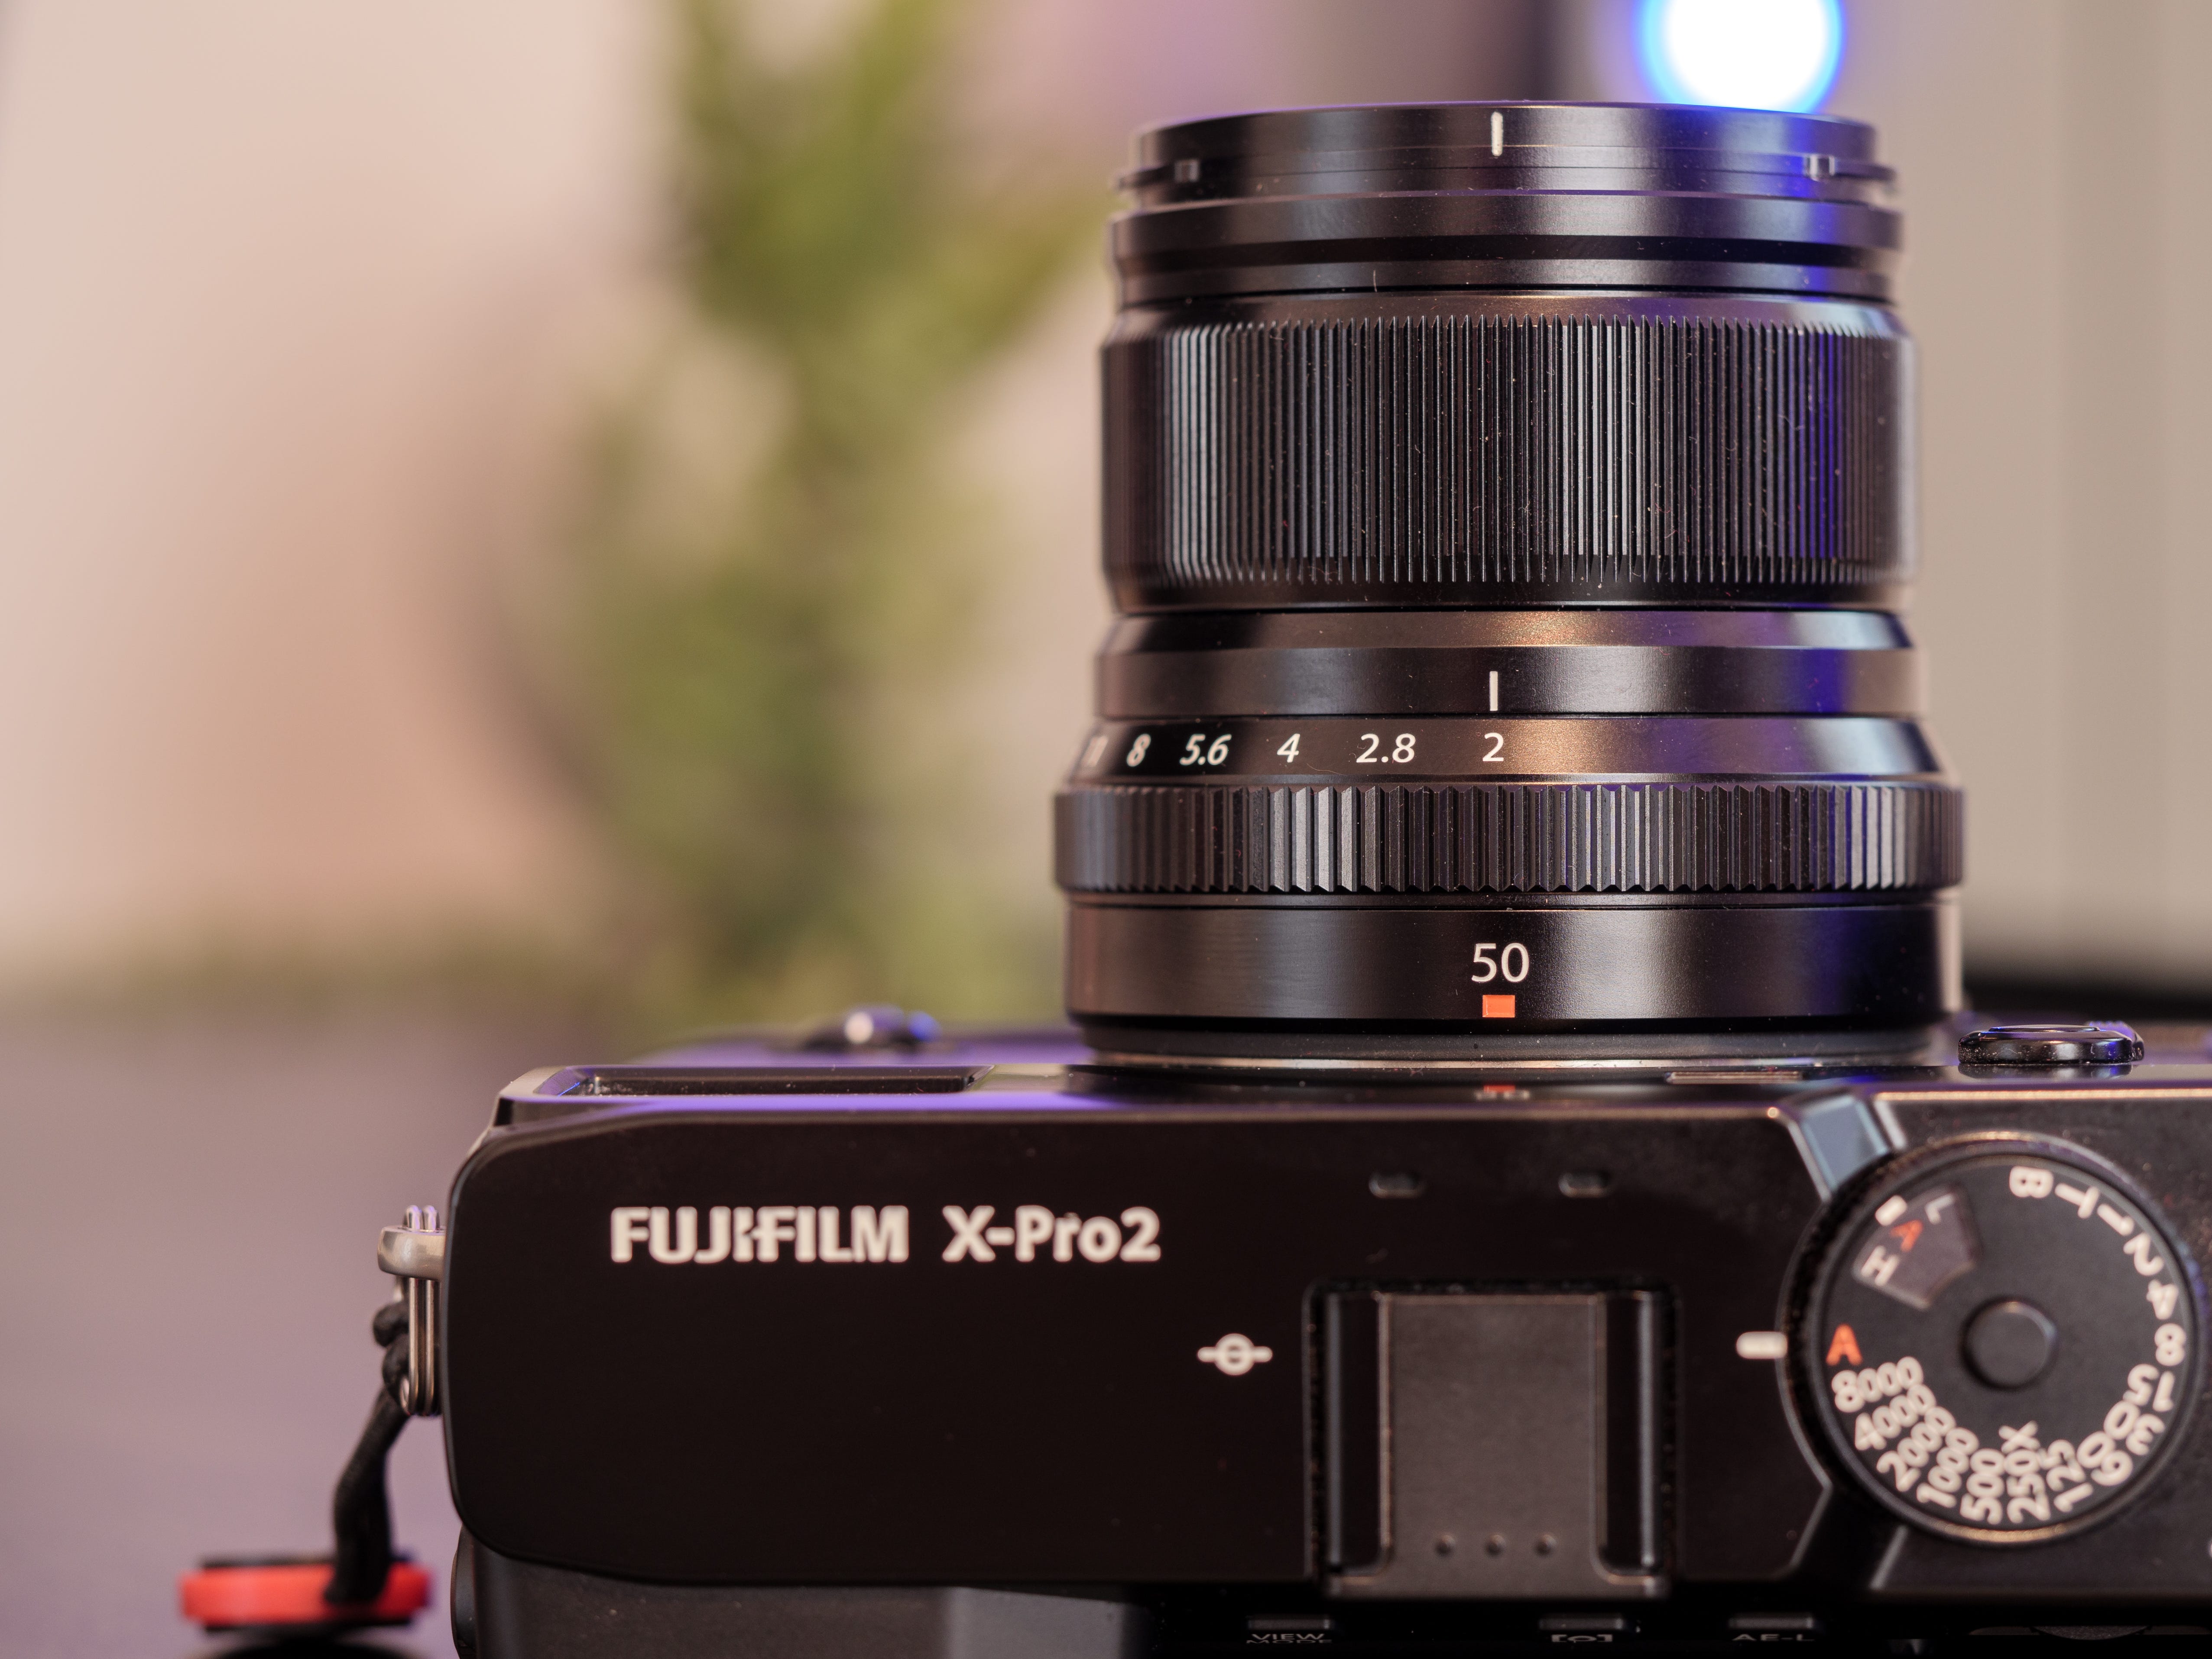 Fujifilm X100 Original: a review 11 years overdue, by Jesse Kim, Vanilla  Pro Max